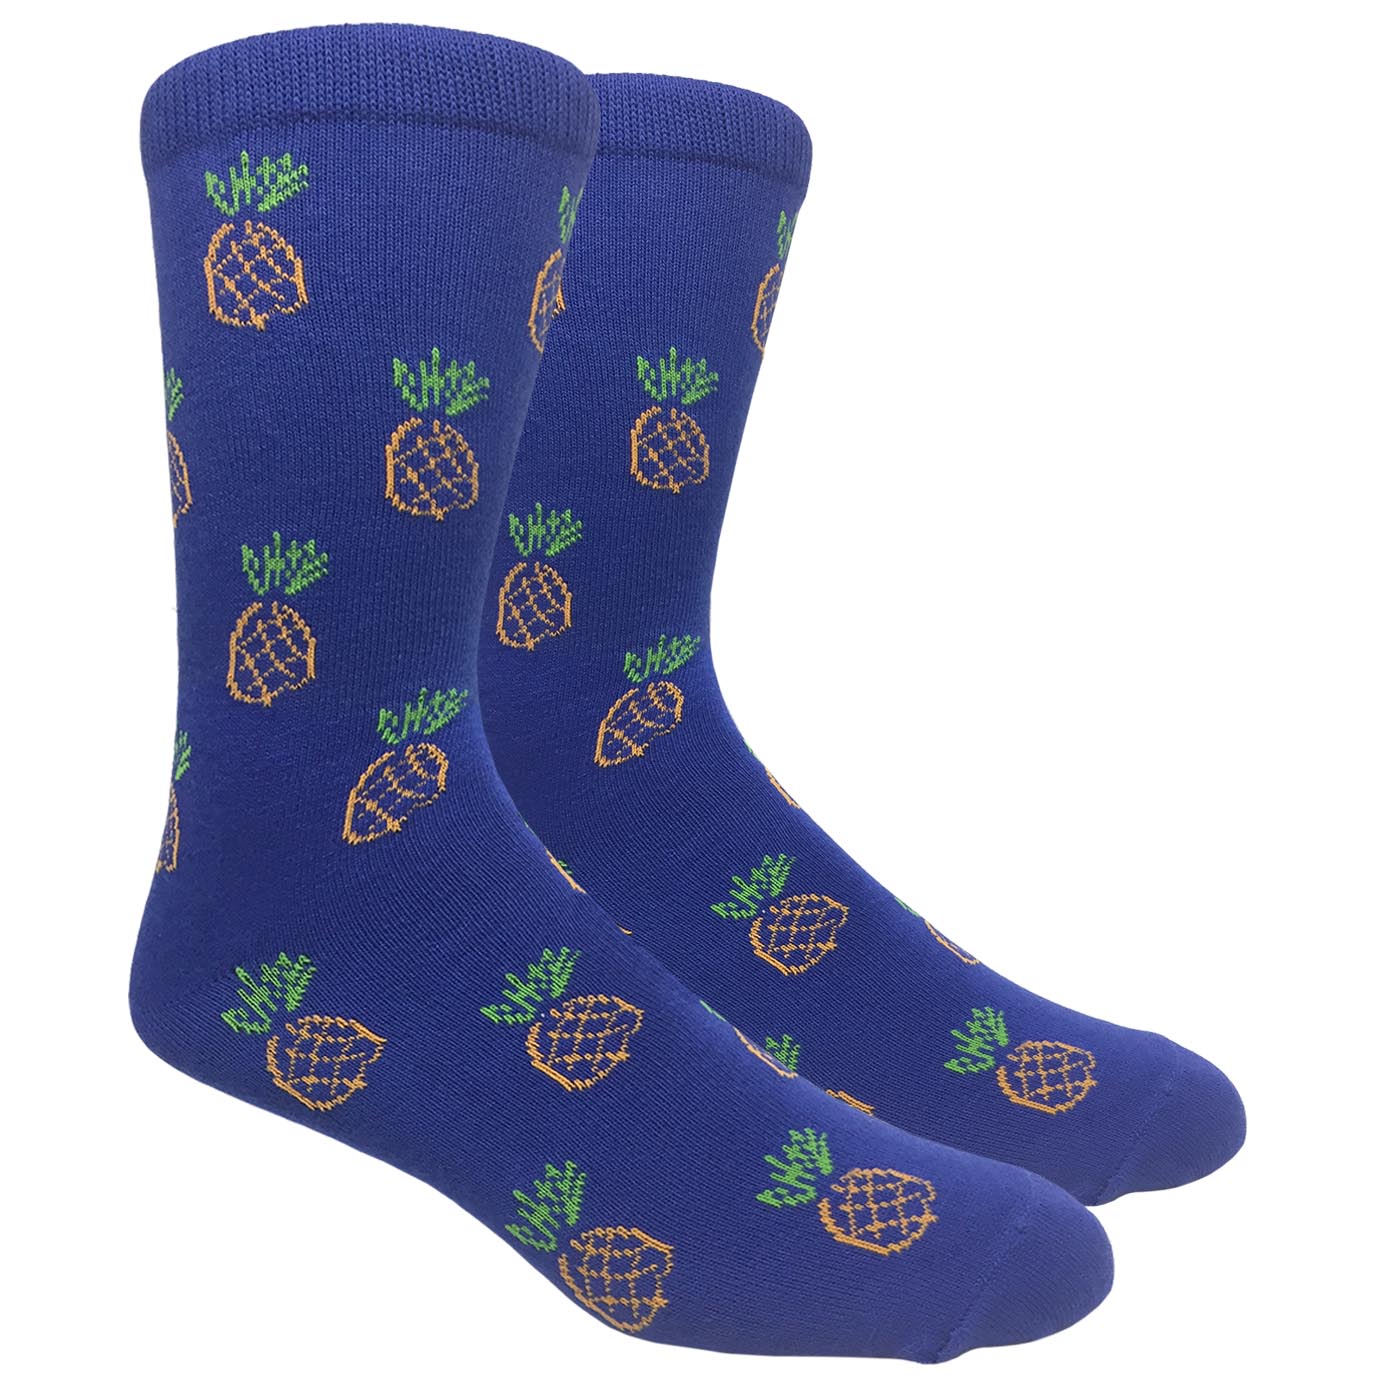 finefit black label novelty socks - blue pineapples